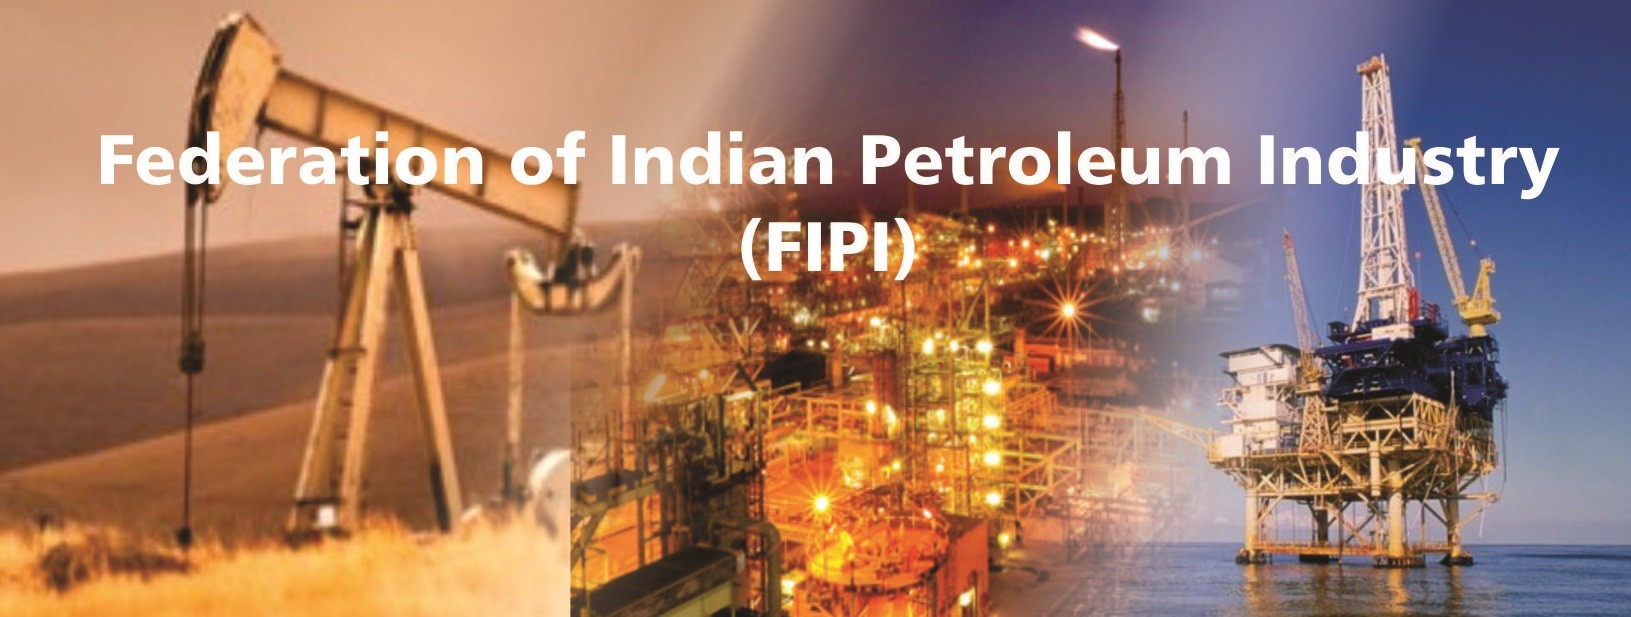 Federation of Indian Petroleum Industry - FIPI | LinkedIn